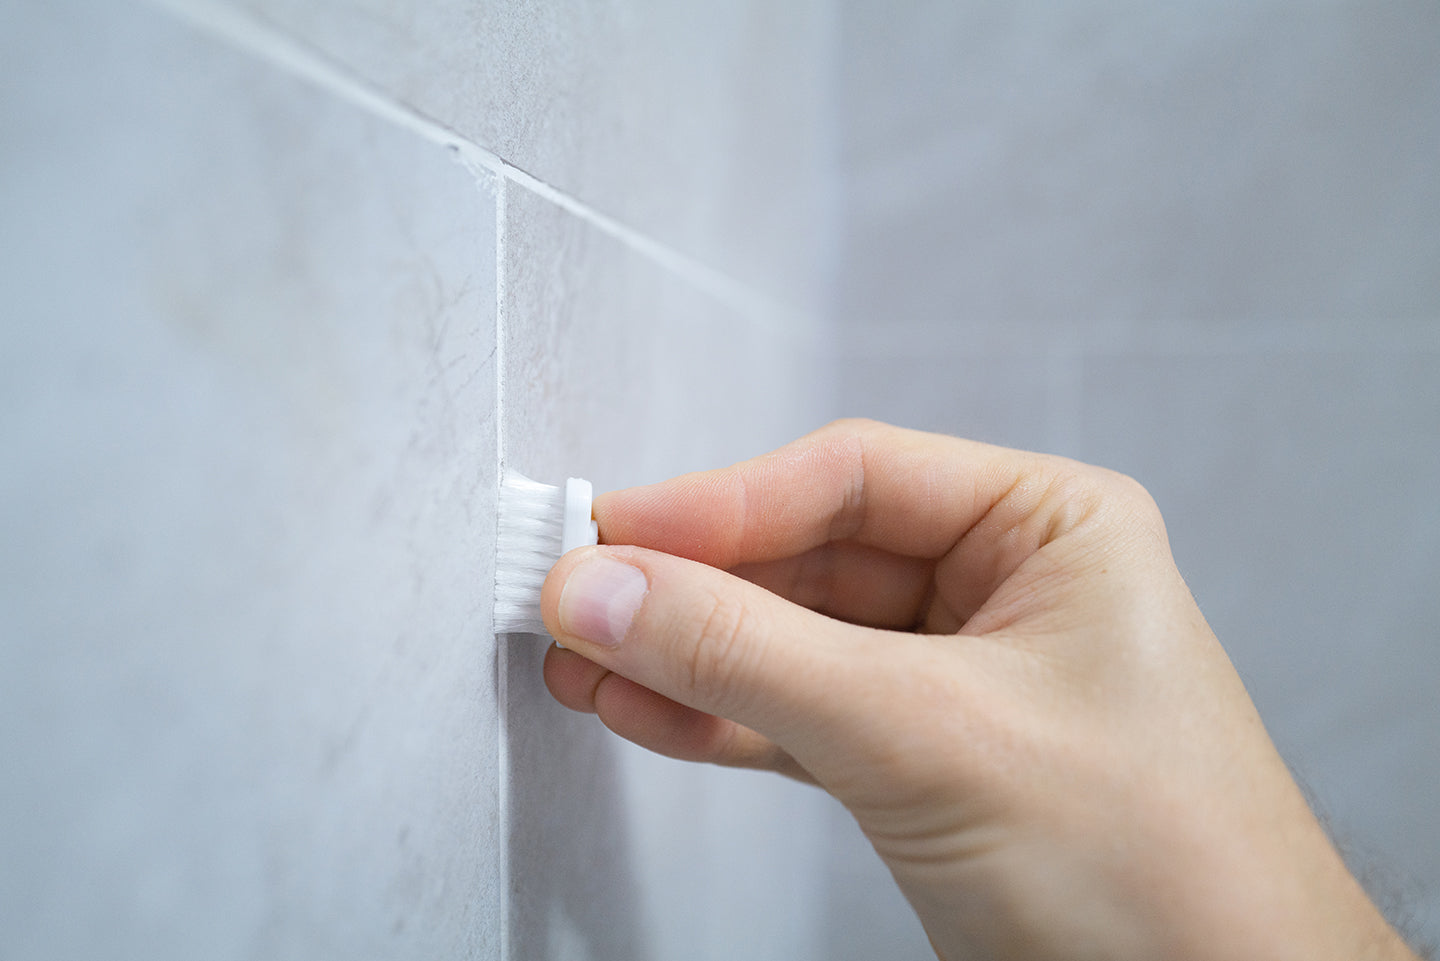 BRiN SeaDifferently Eco toothbrush reusable Clean Bathroom hack